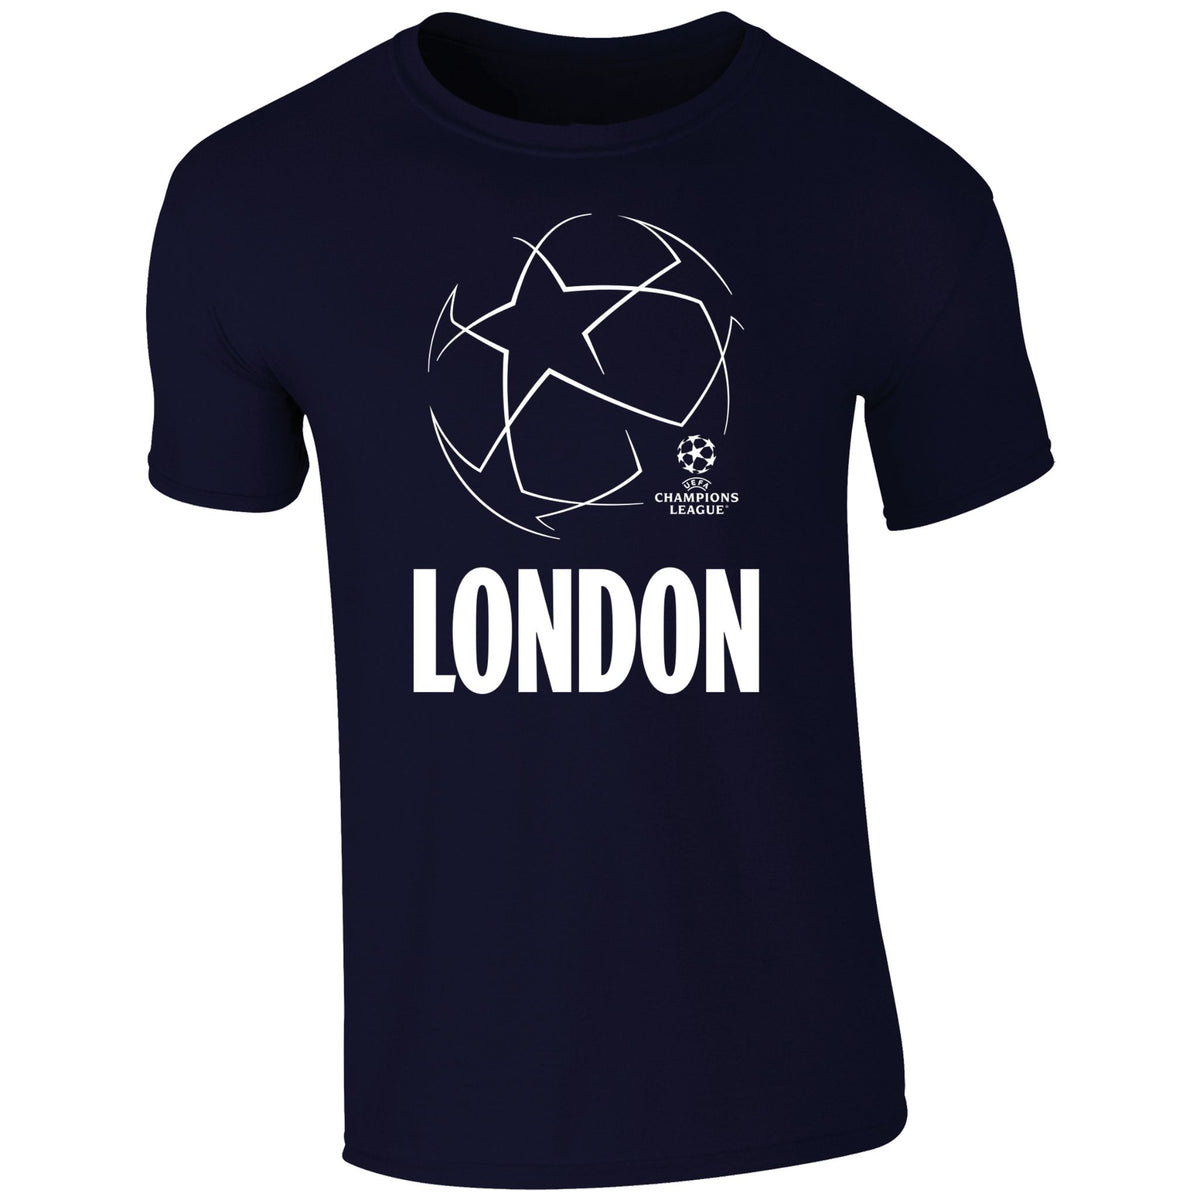 Champions League Starball London City T-Shirt Navy